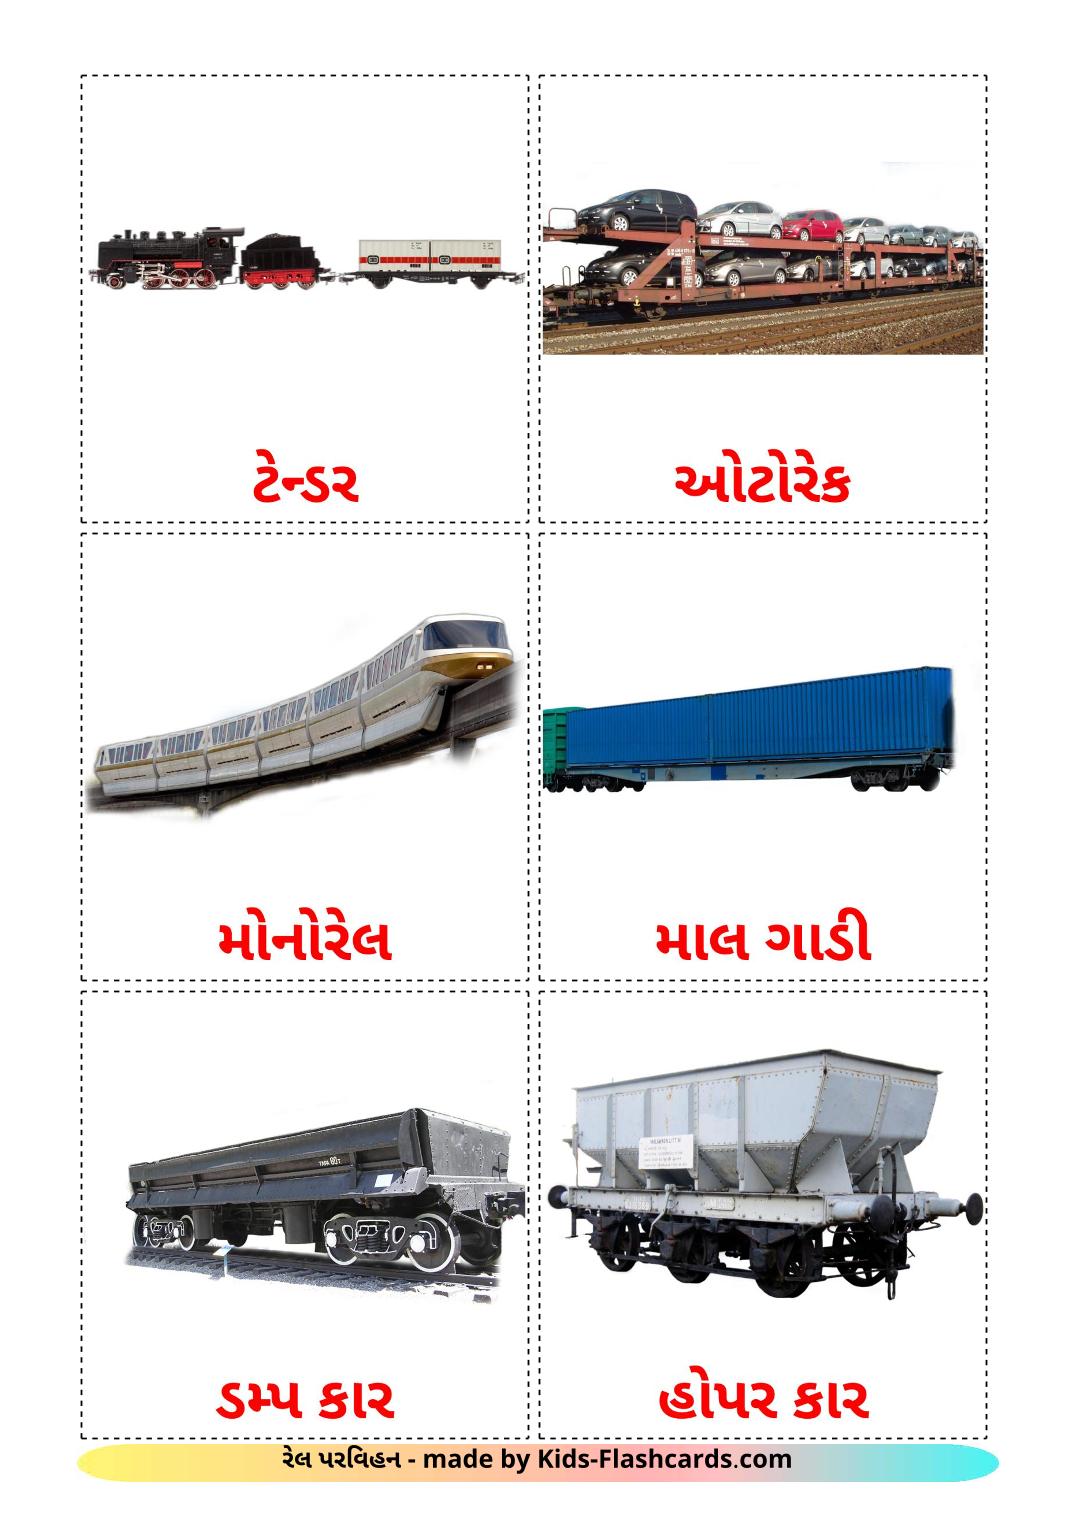 Transporte ferroviario - 18 fichas de gujarati para imprimir gratis 